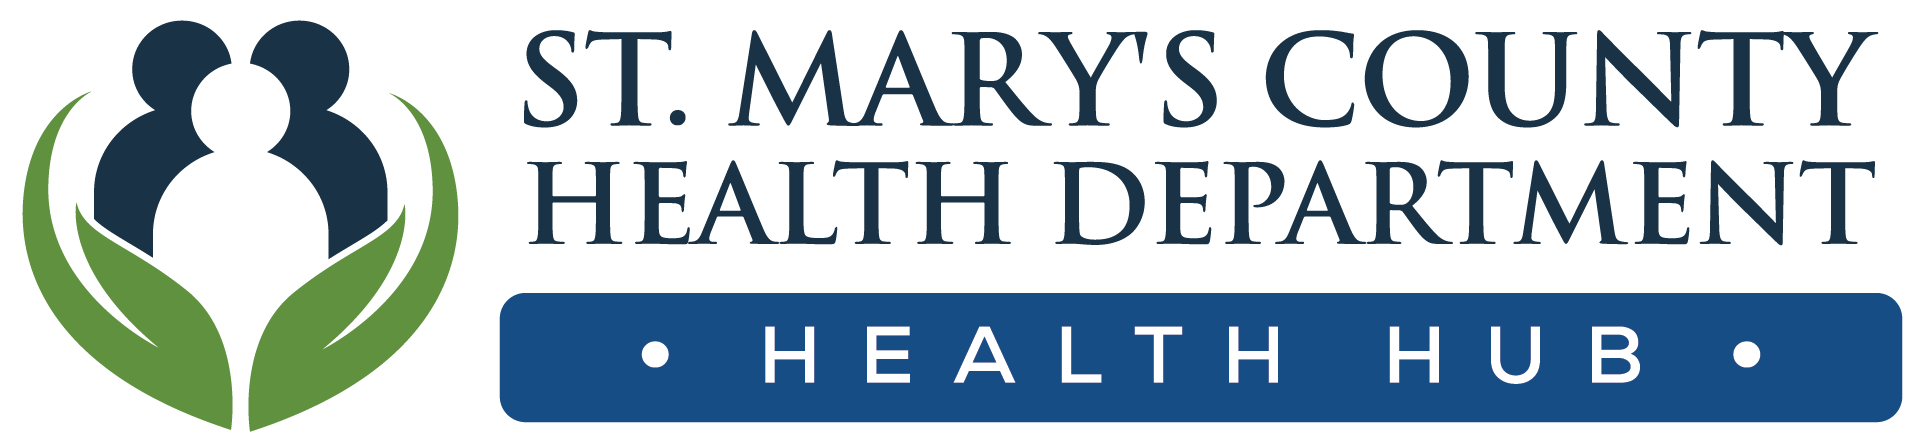 St. Mary's County Health Department Health Hub